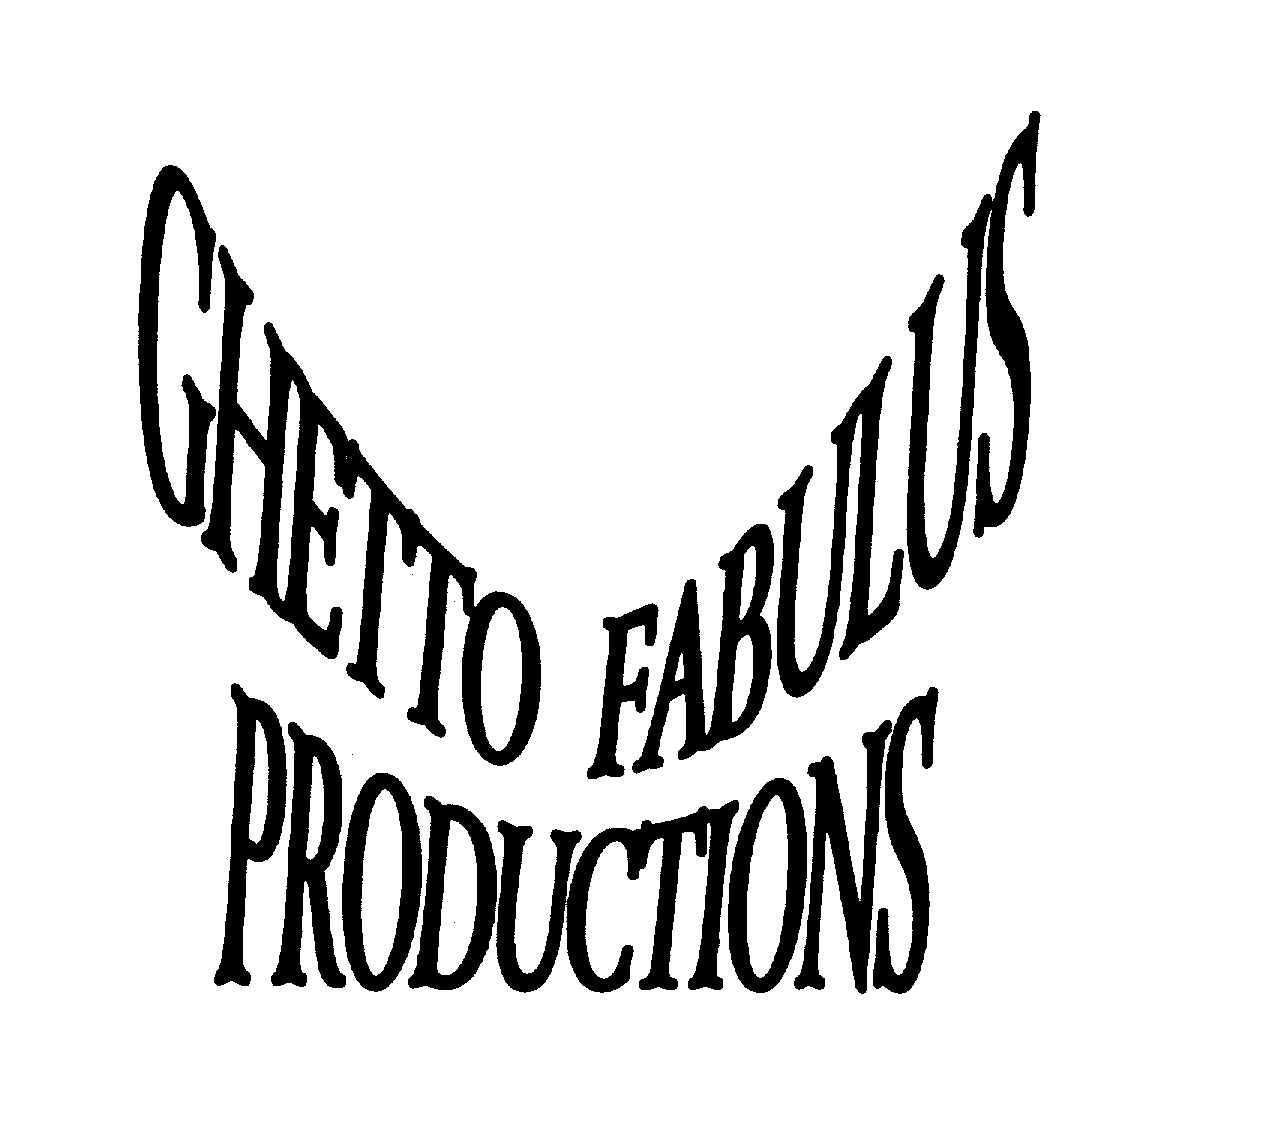  GHETTO FABULUS PRODUCTIONS